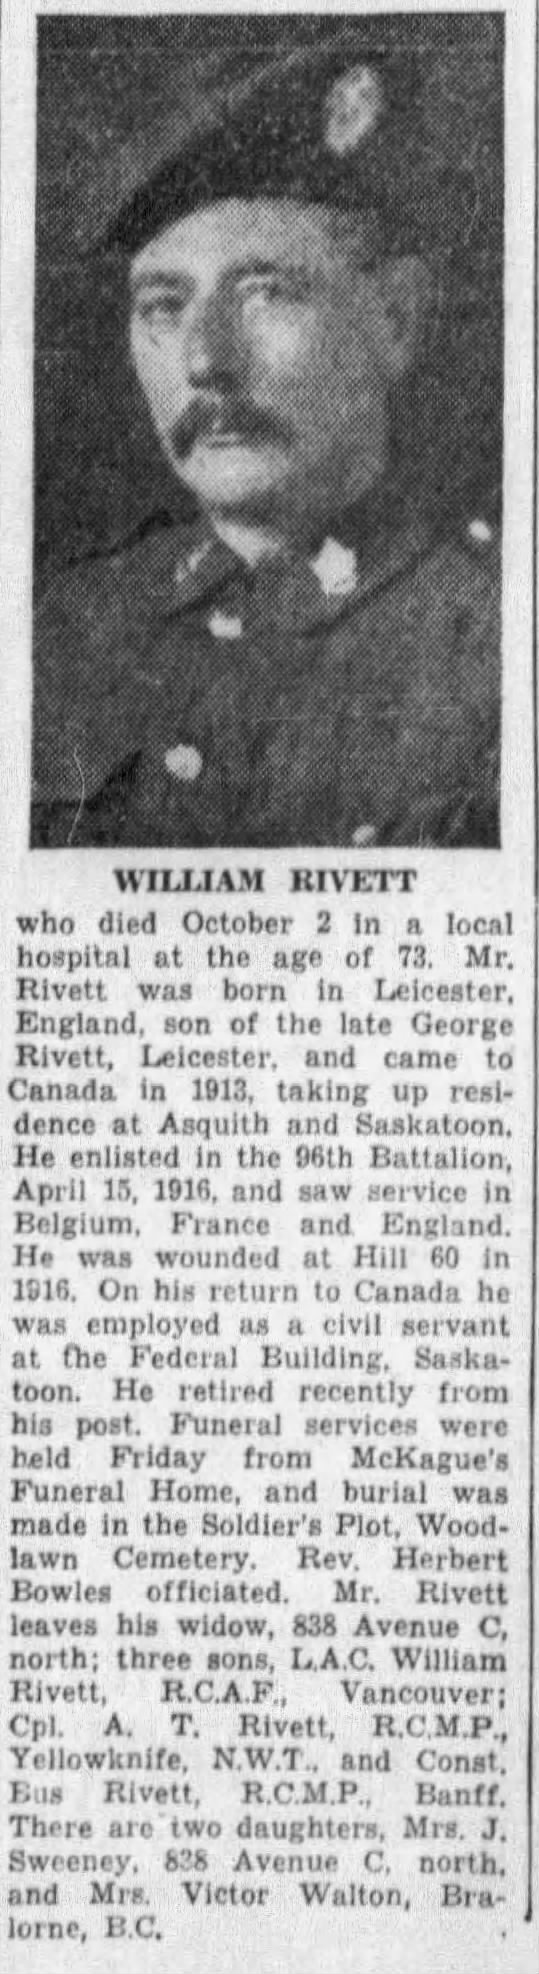 Obituary: WILLIAM RIVETT (Aged 73)